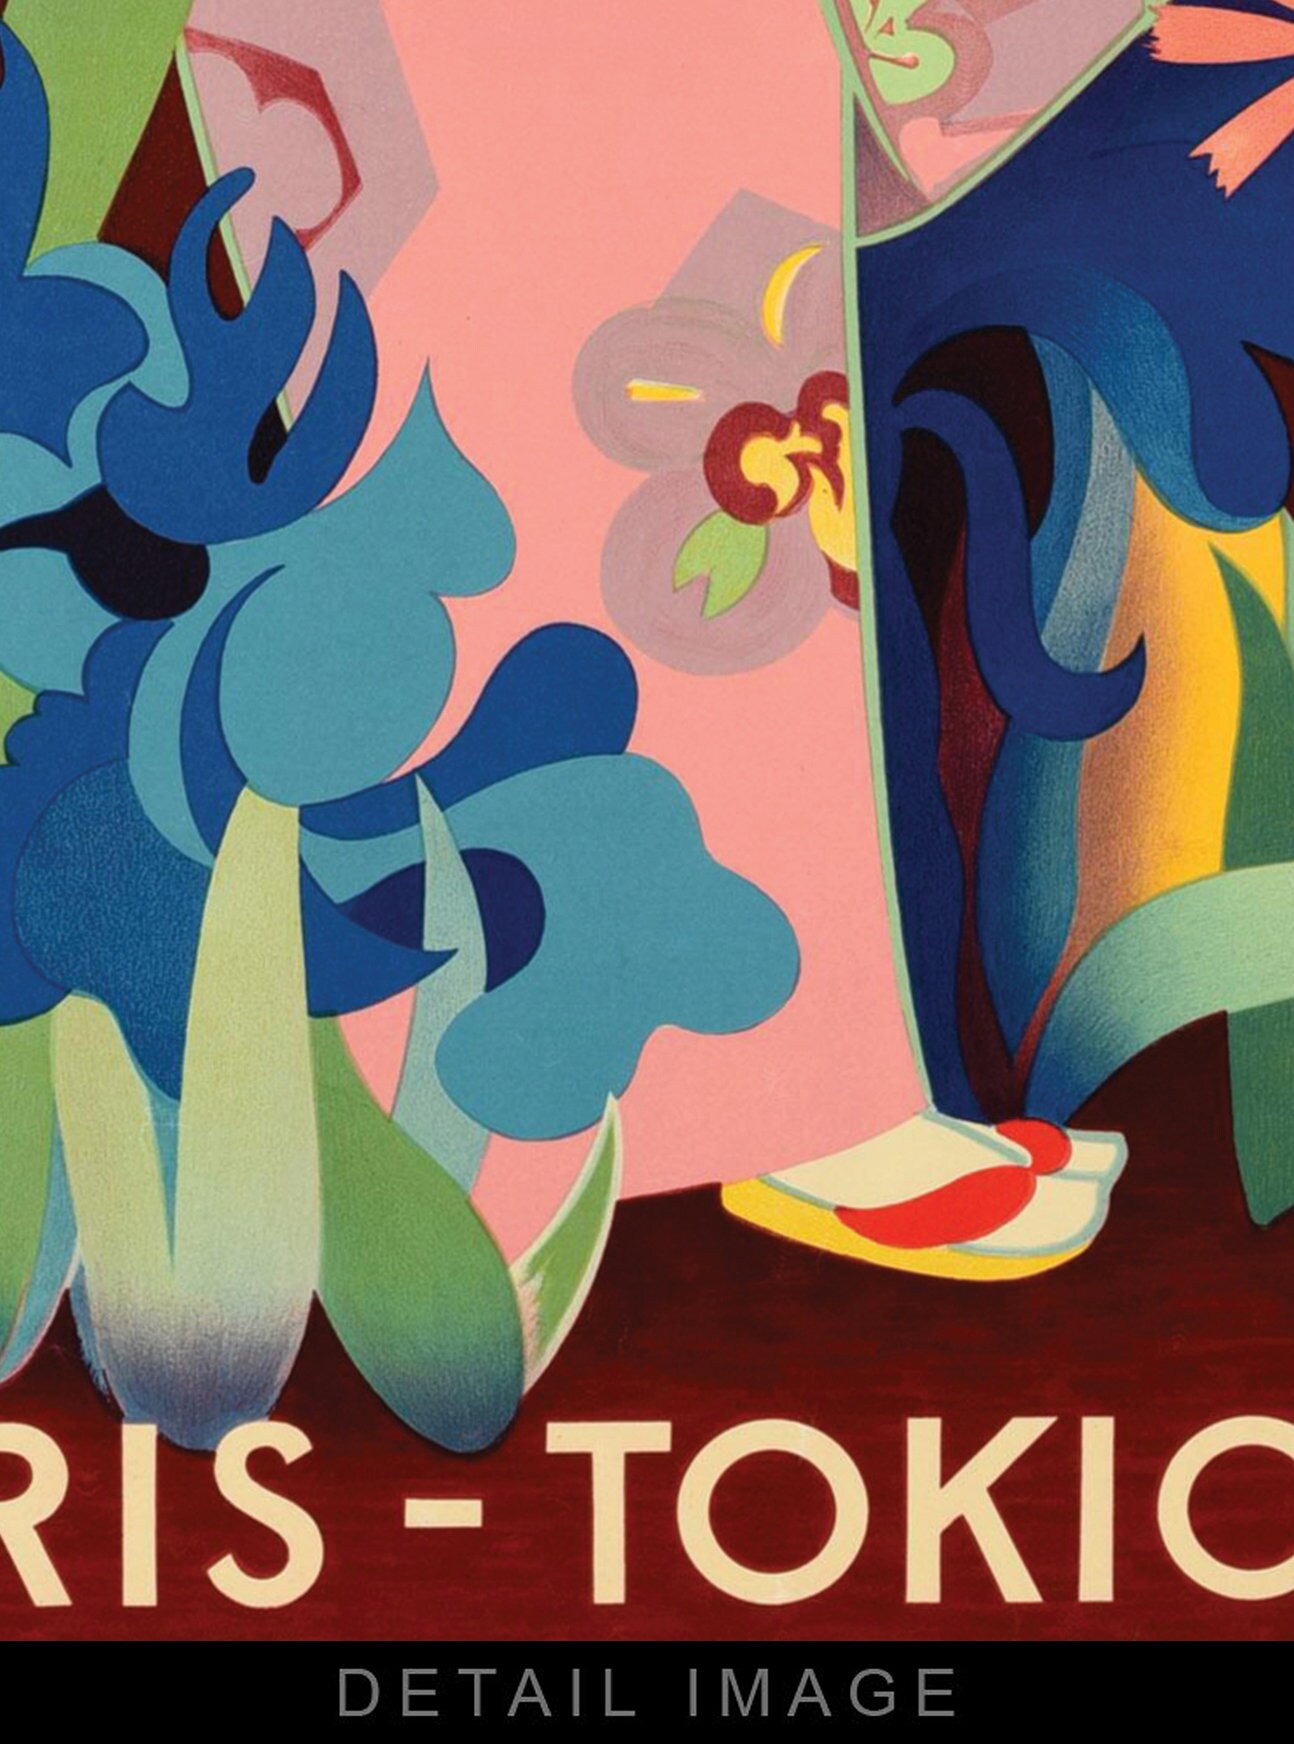 Travel Poster Air France Paris Tokio c1950s by Yasse Tabuchi 12x18  Heavyweight Art Print 